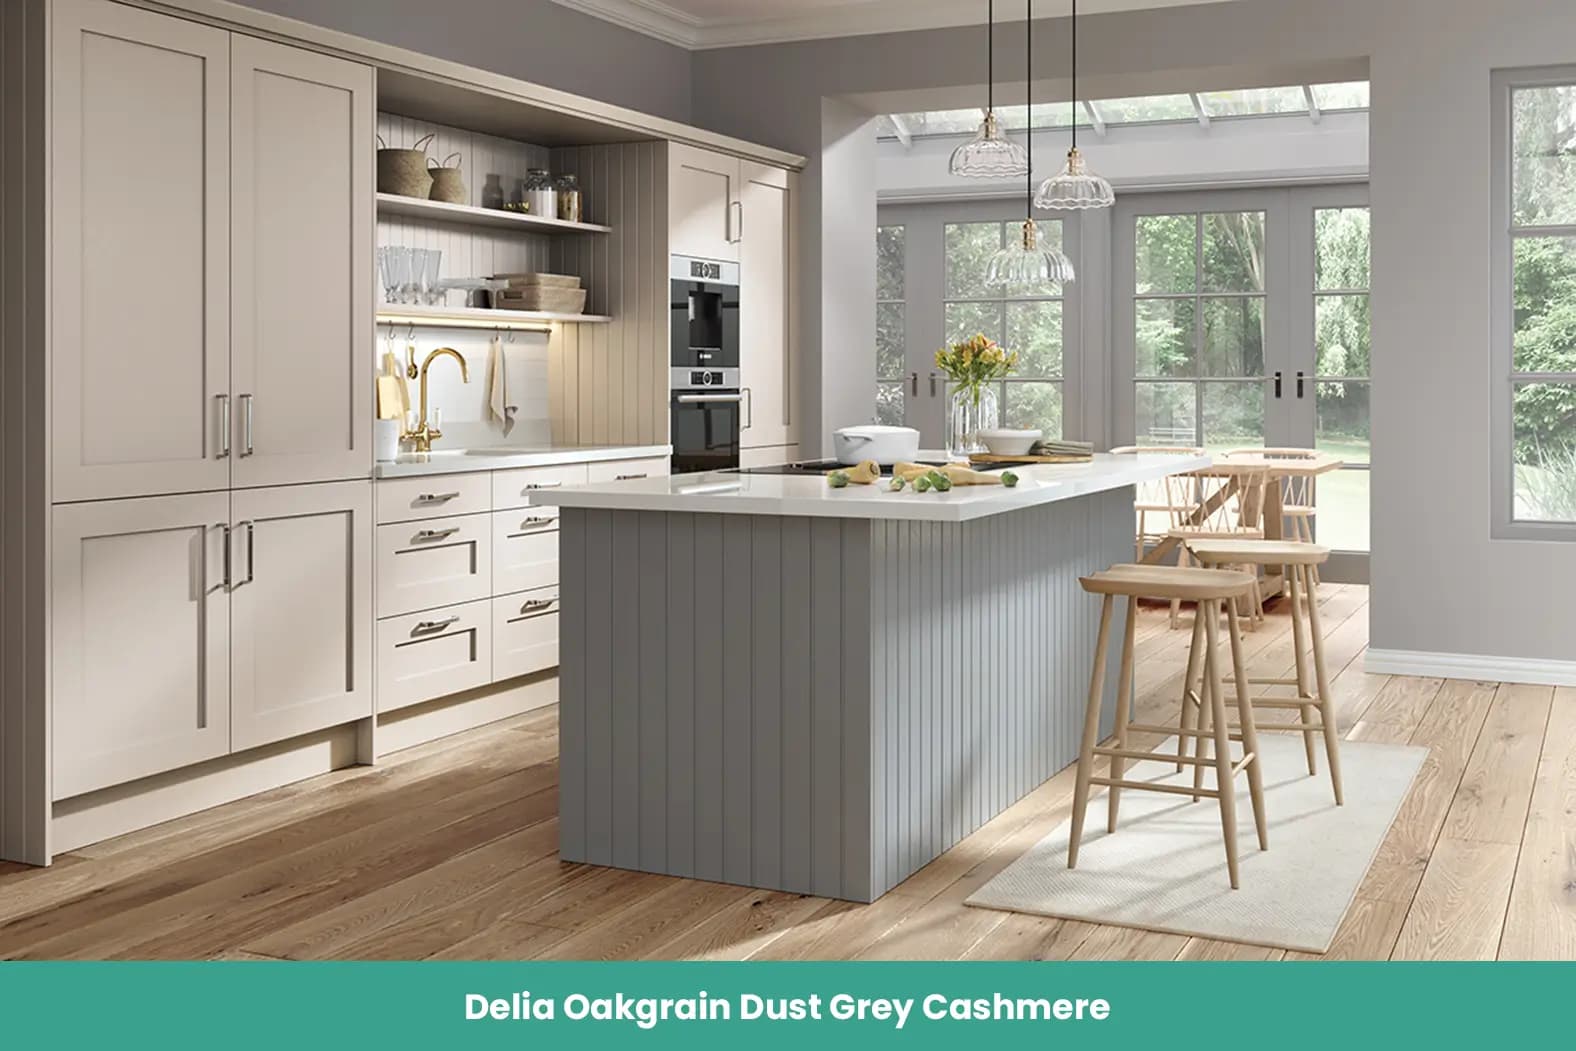 Delia Oakgrain Dust Grey Cashmere Kitchen